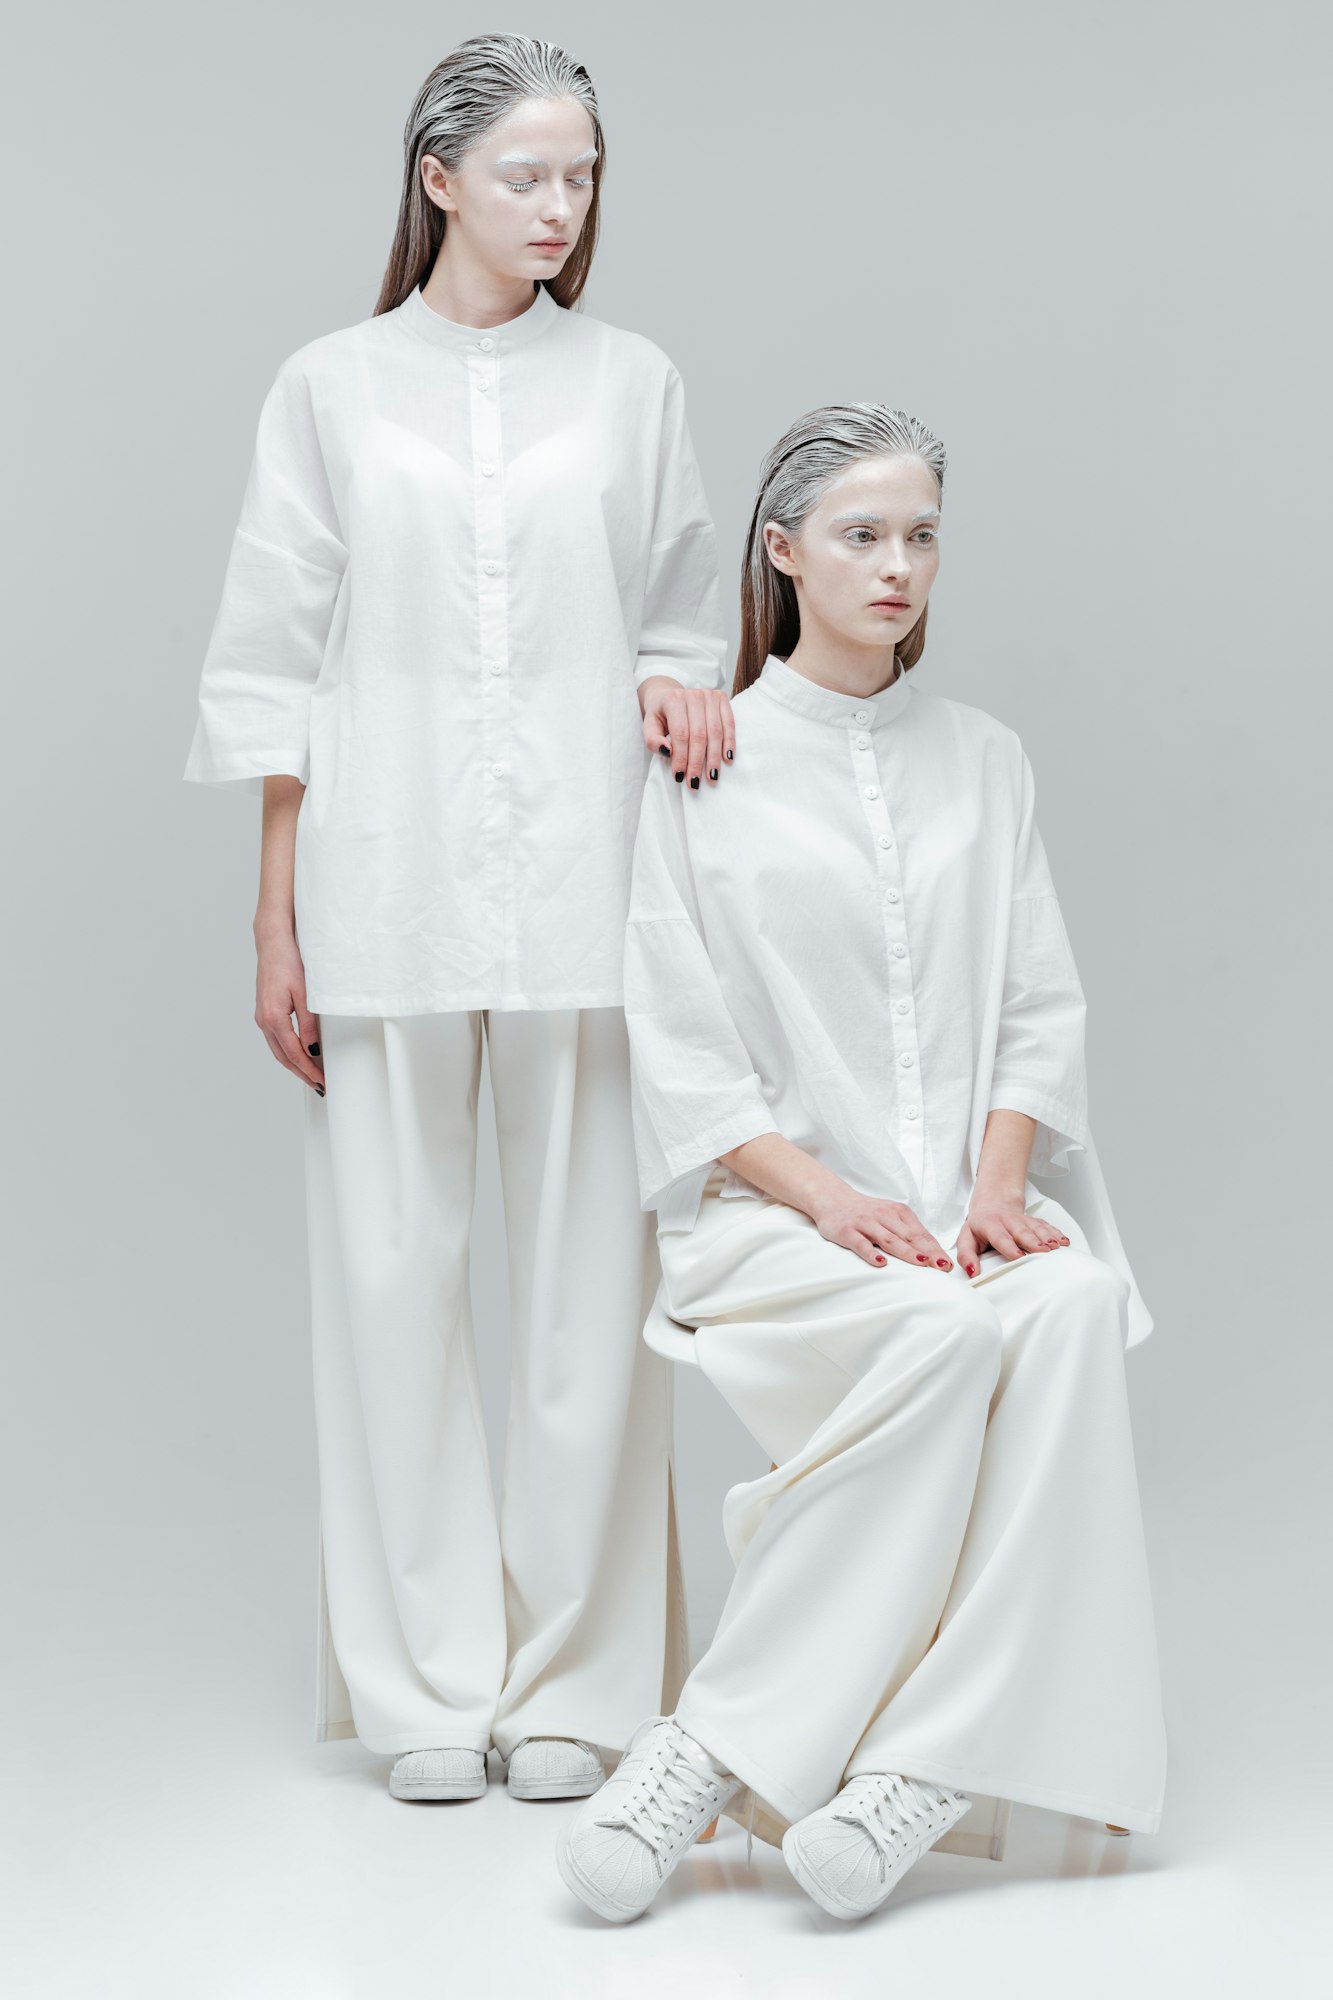 Two women in white fashion clothes